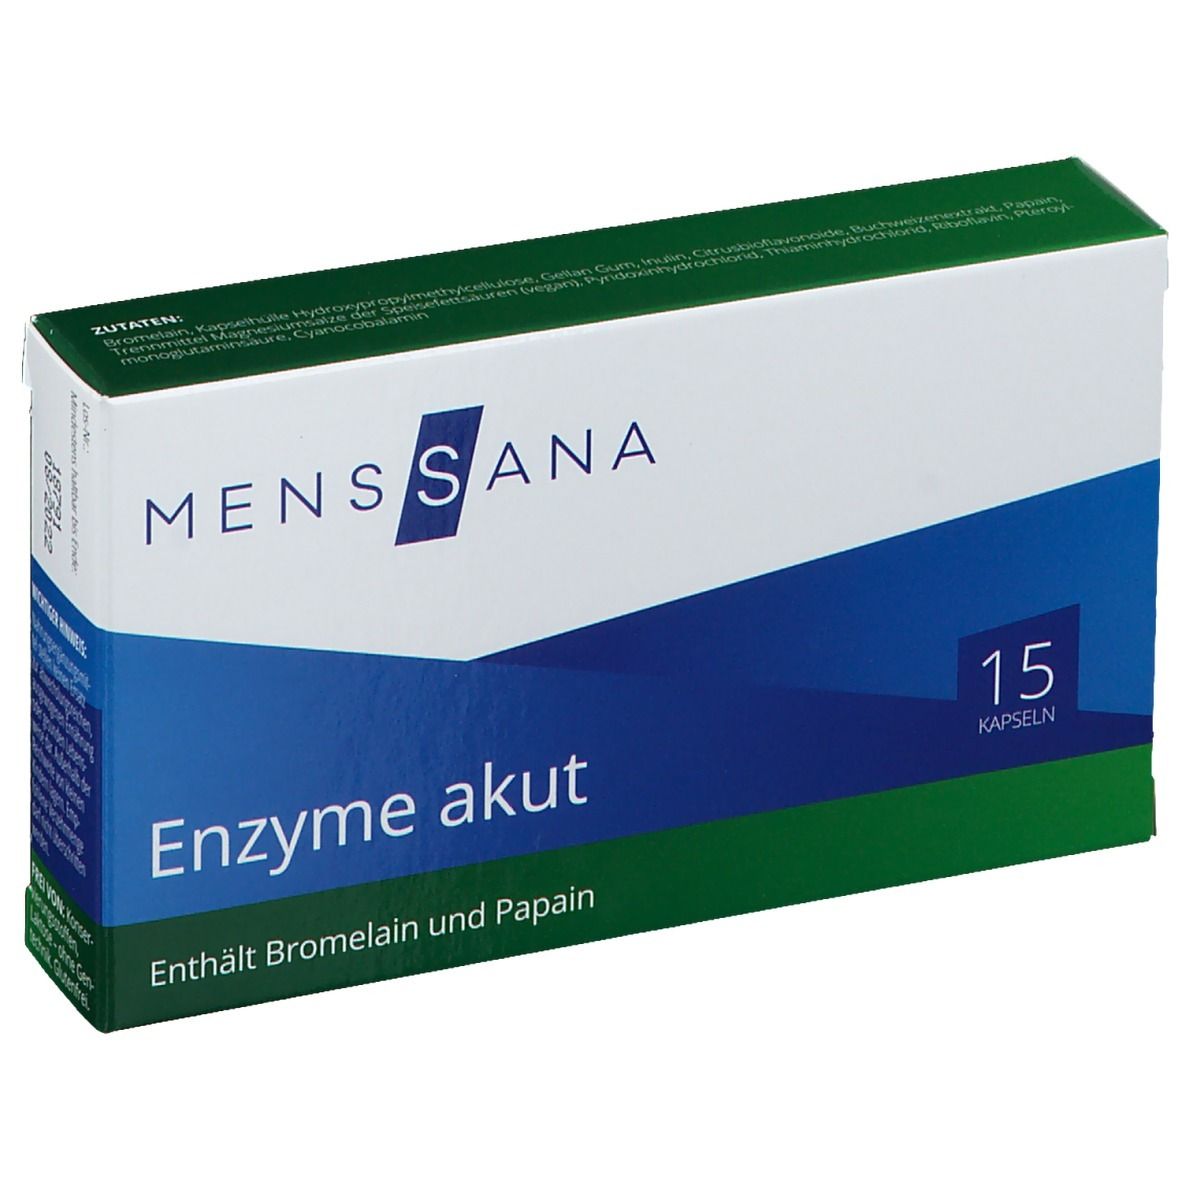 MensSana Enzyme akut